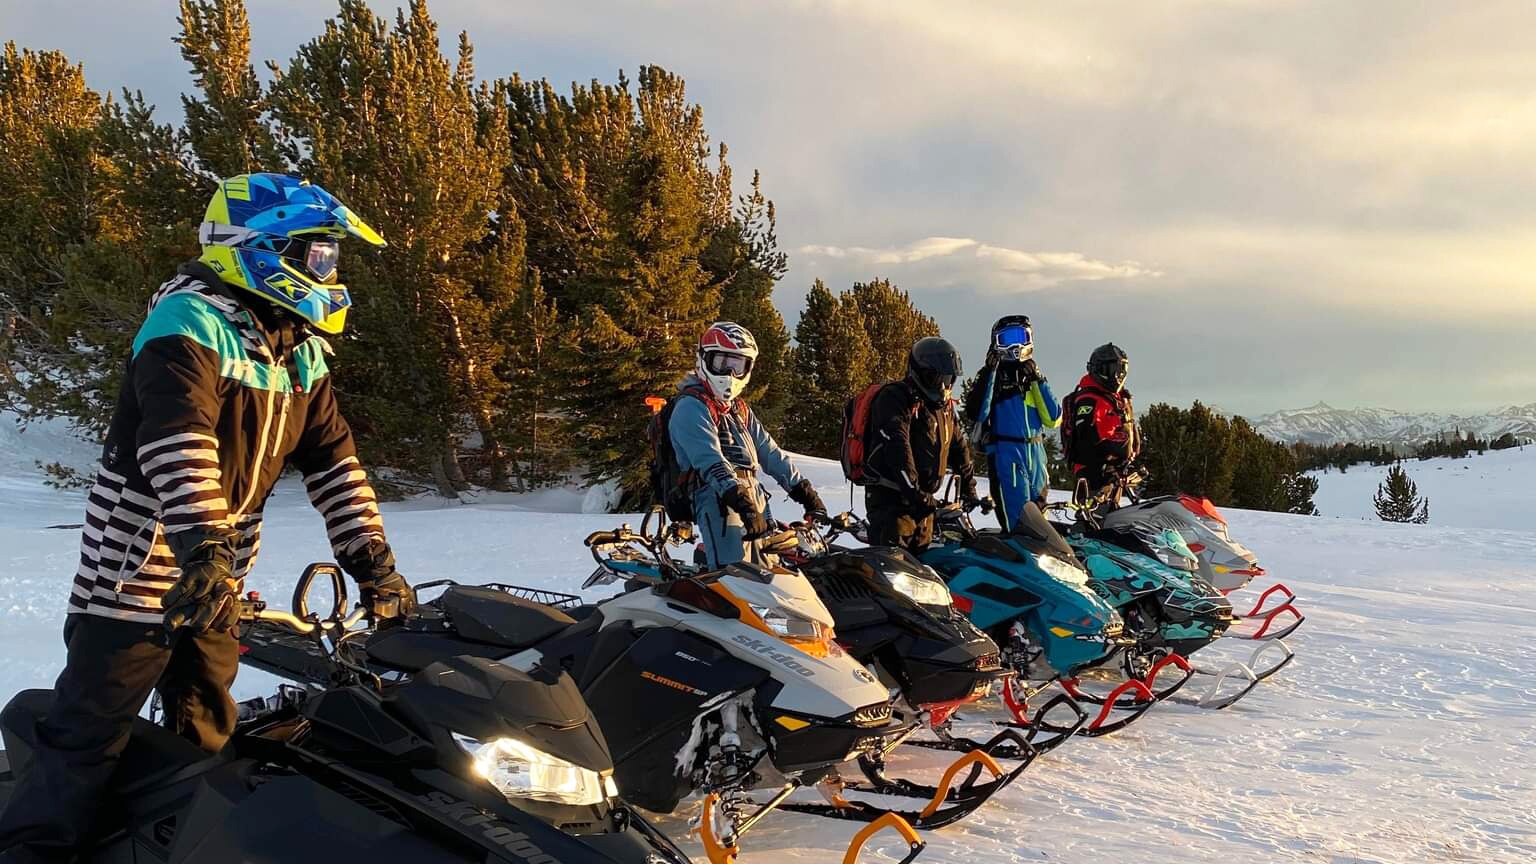 The 2023 Ski-Doo snowmobile lineup trailer